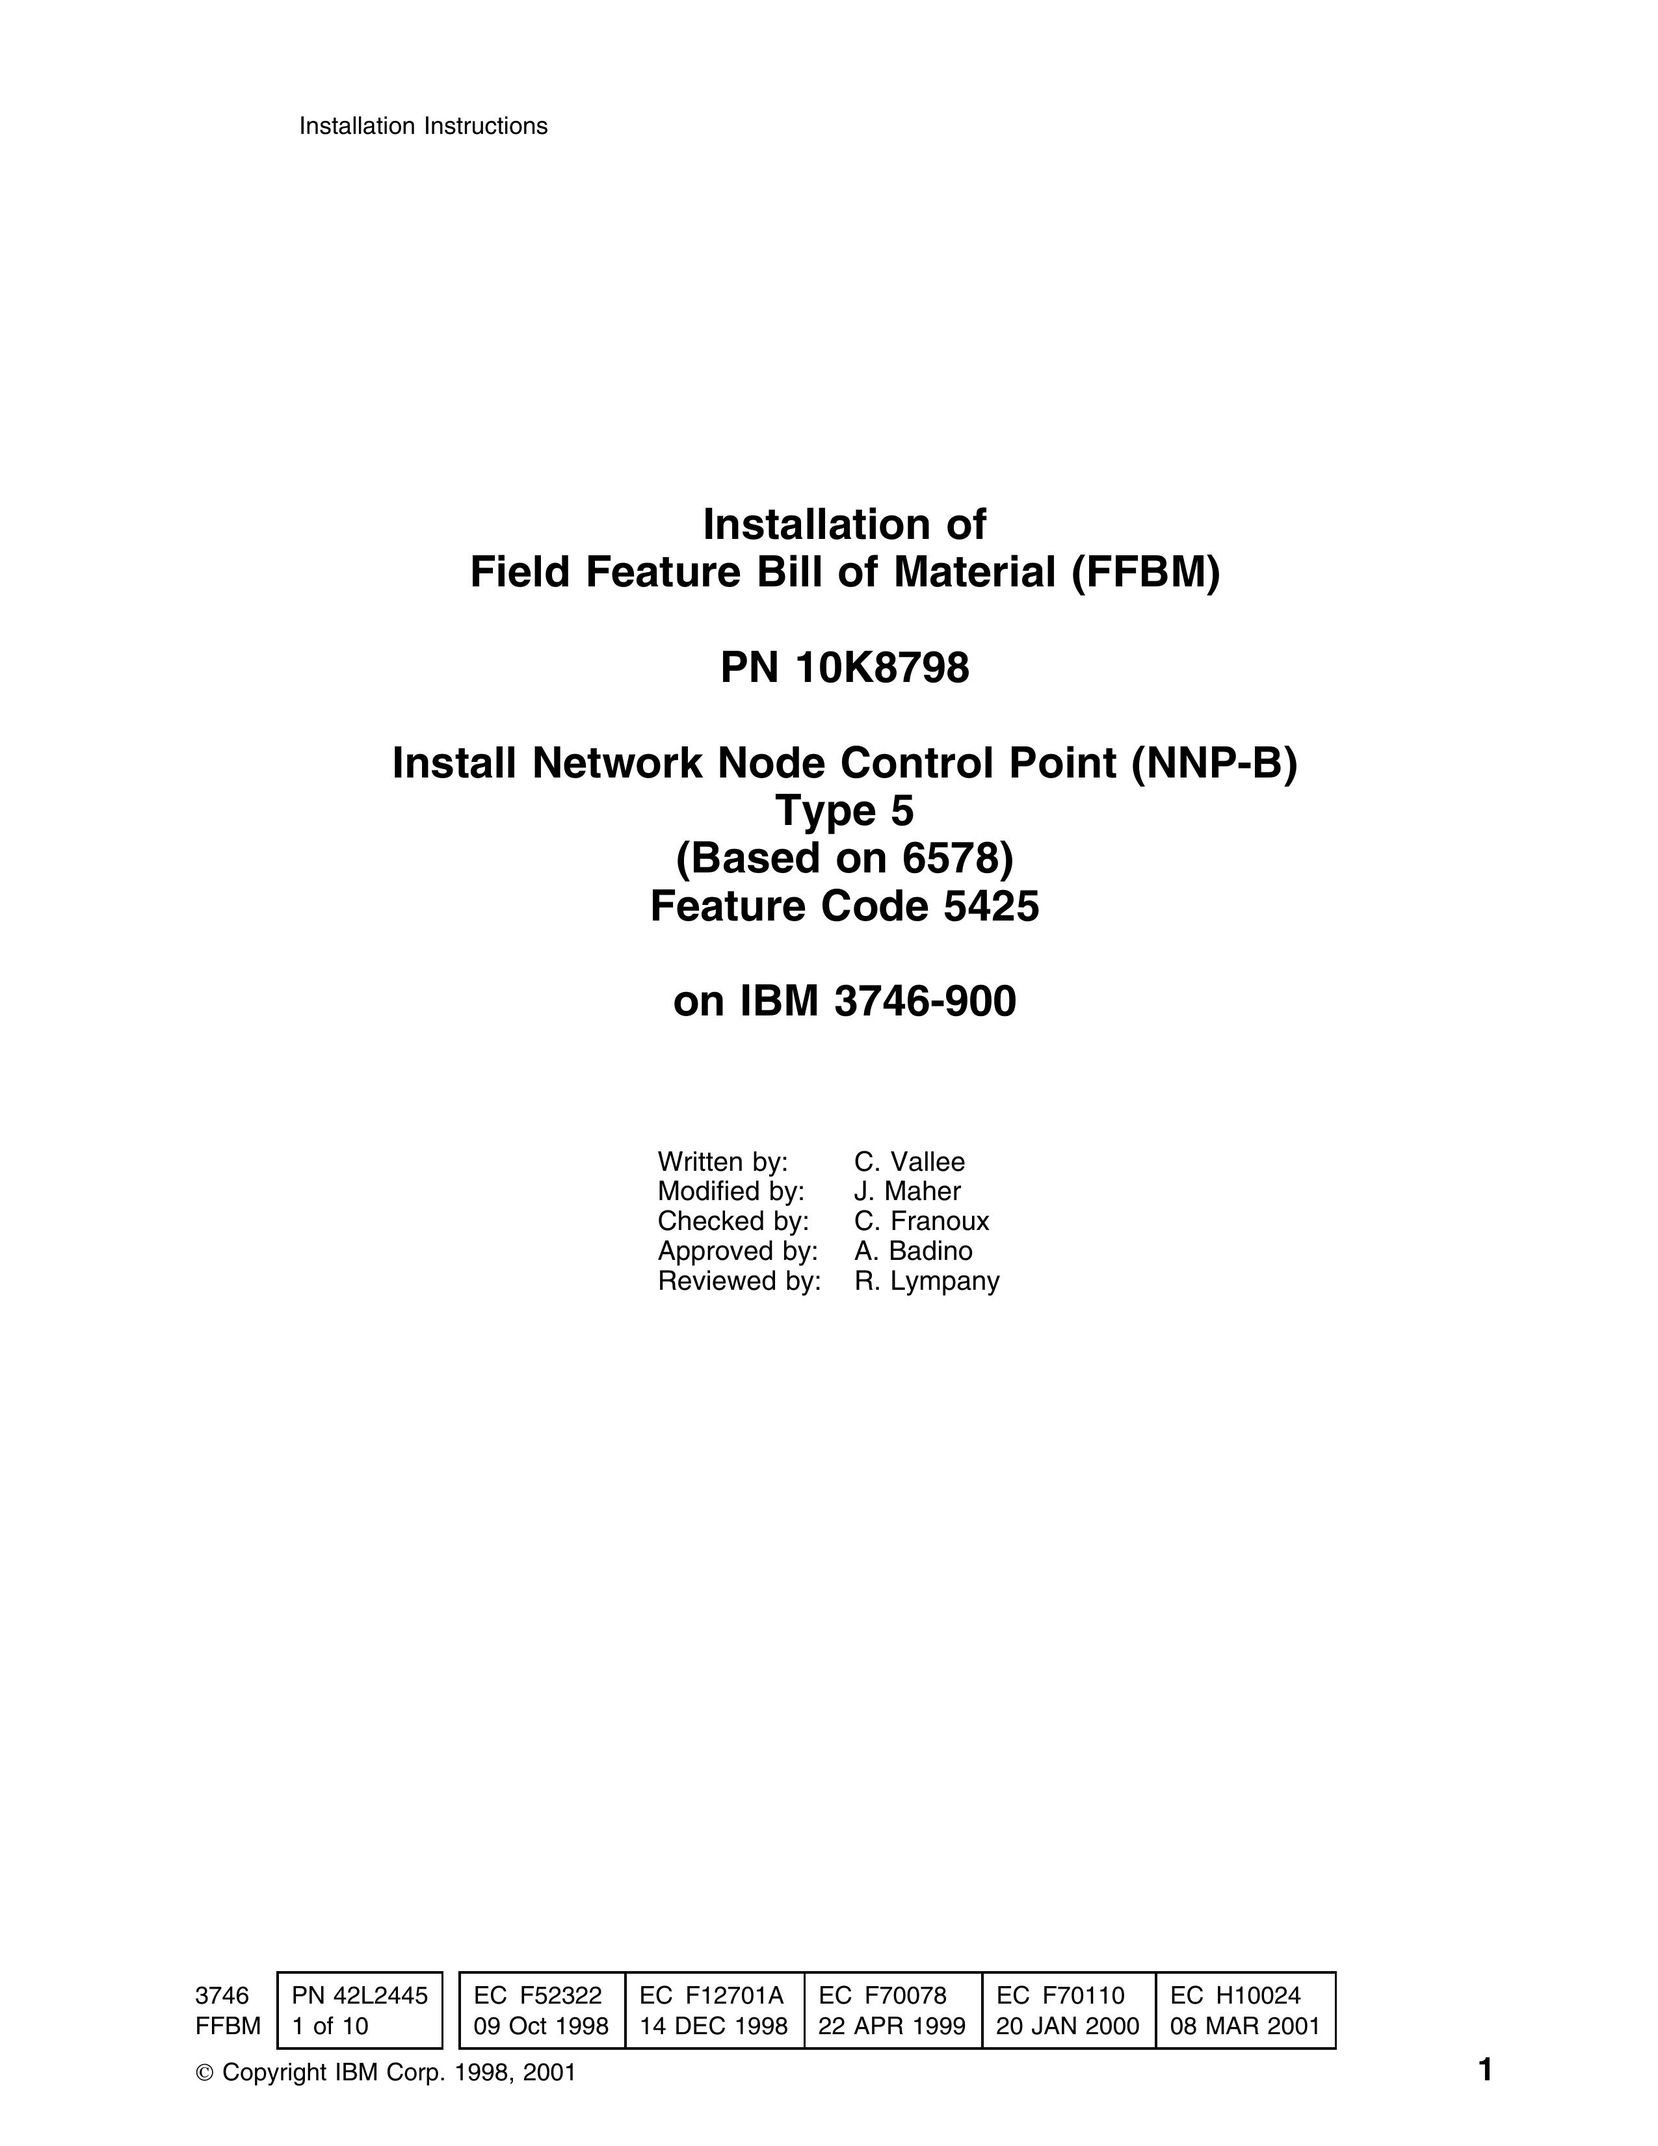 IBM PN 10K8798 Network Hardware User Manual